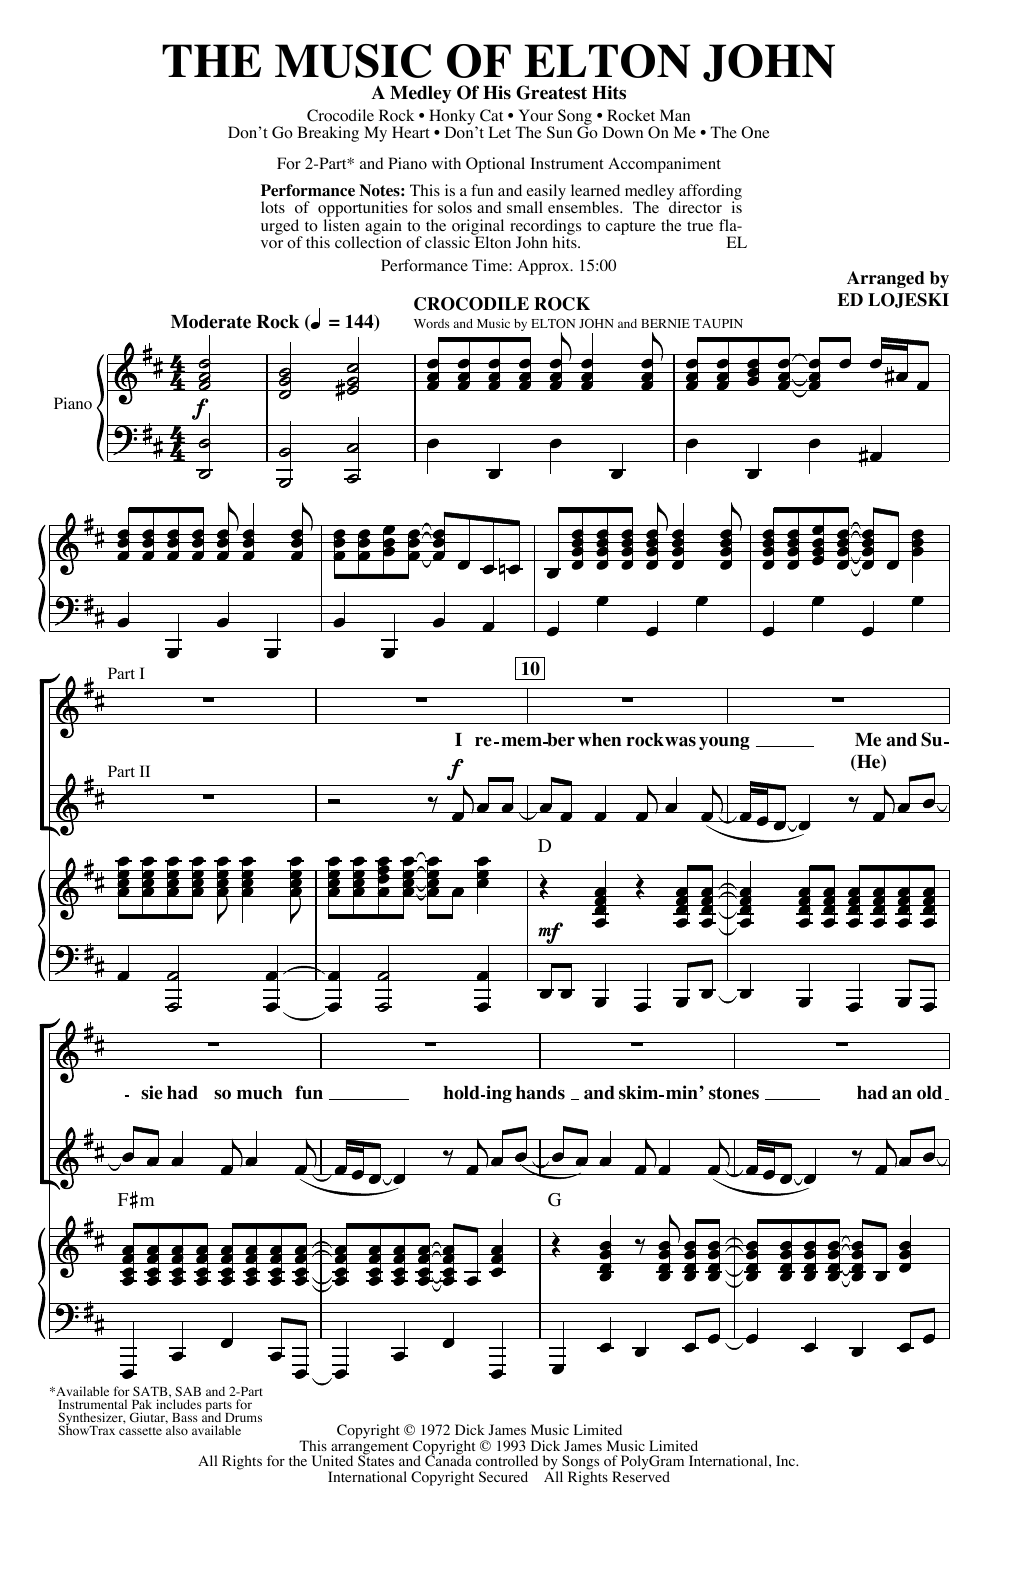 Elton John The Music of Elton John (A Medley Of His Greatest Hits) (arr. Ed Lojeski) Sheet Music Notes & Chords for SATB Choir - Download or Print PDF